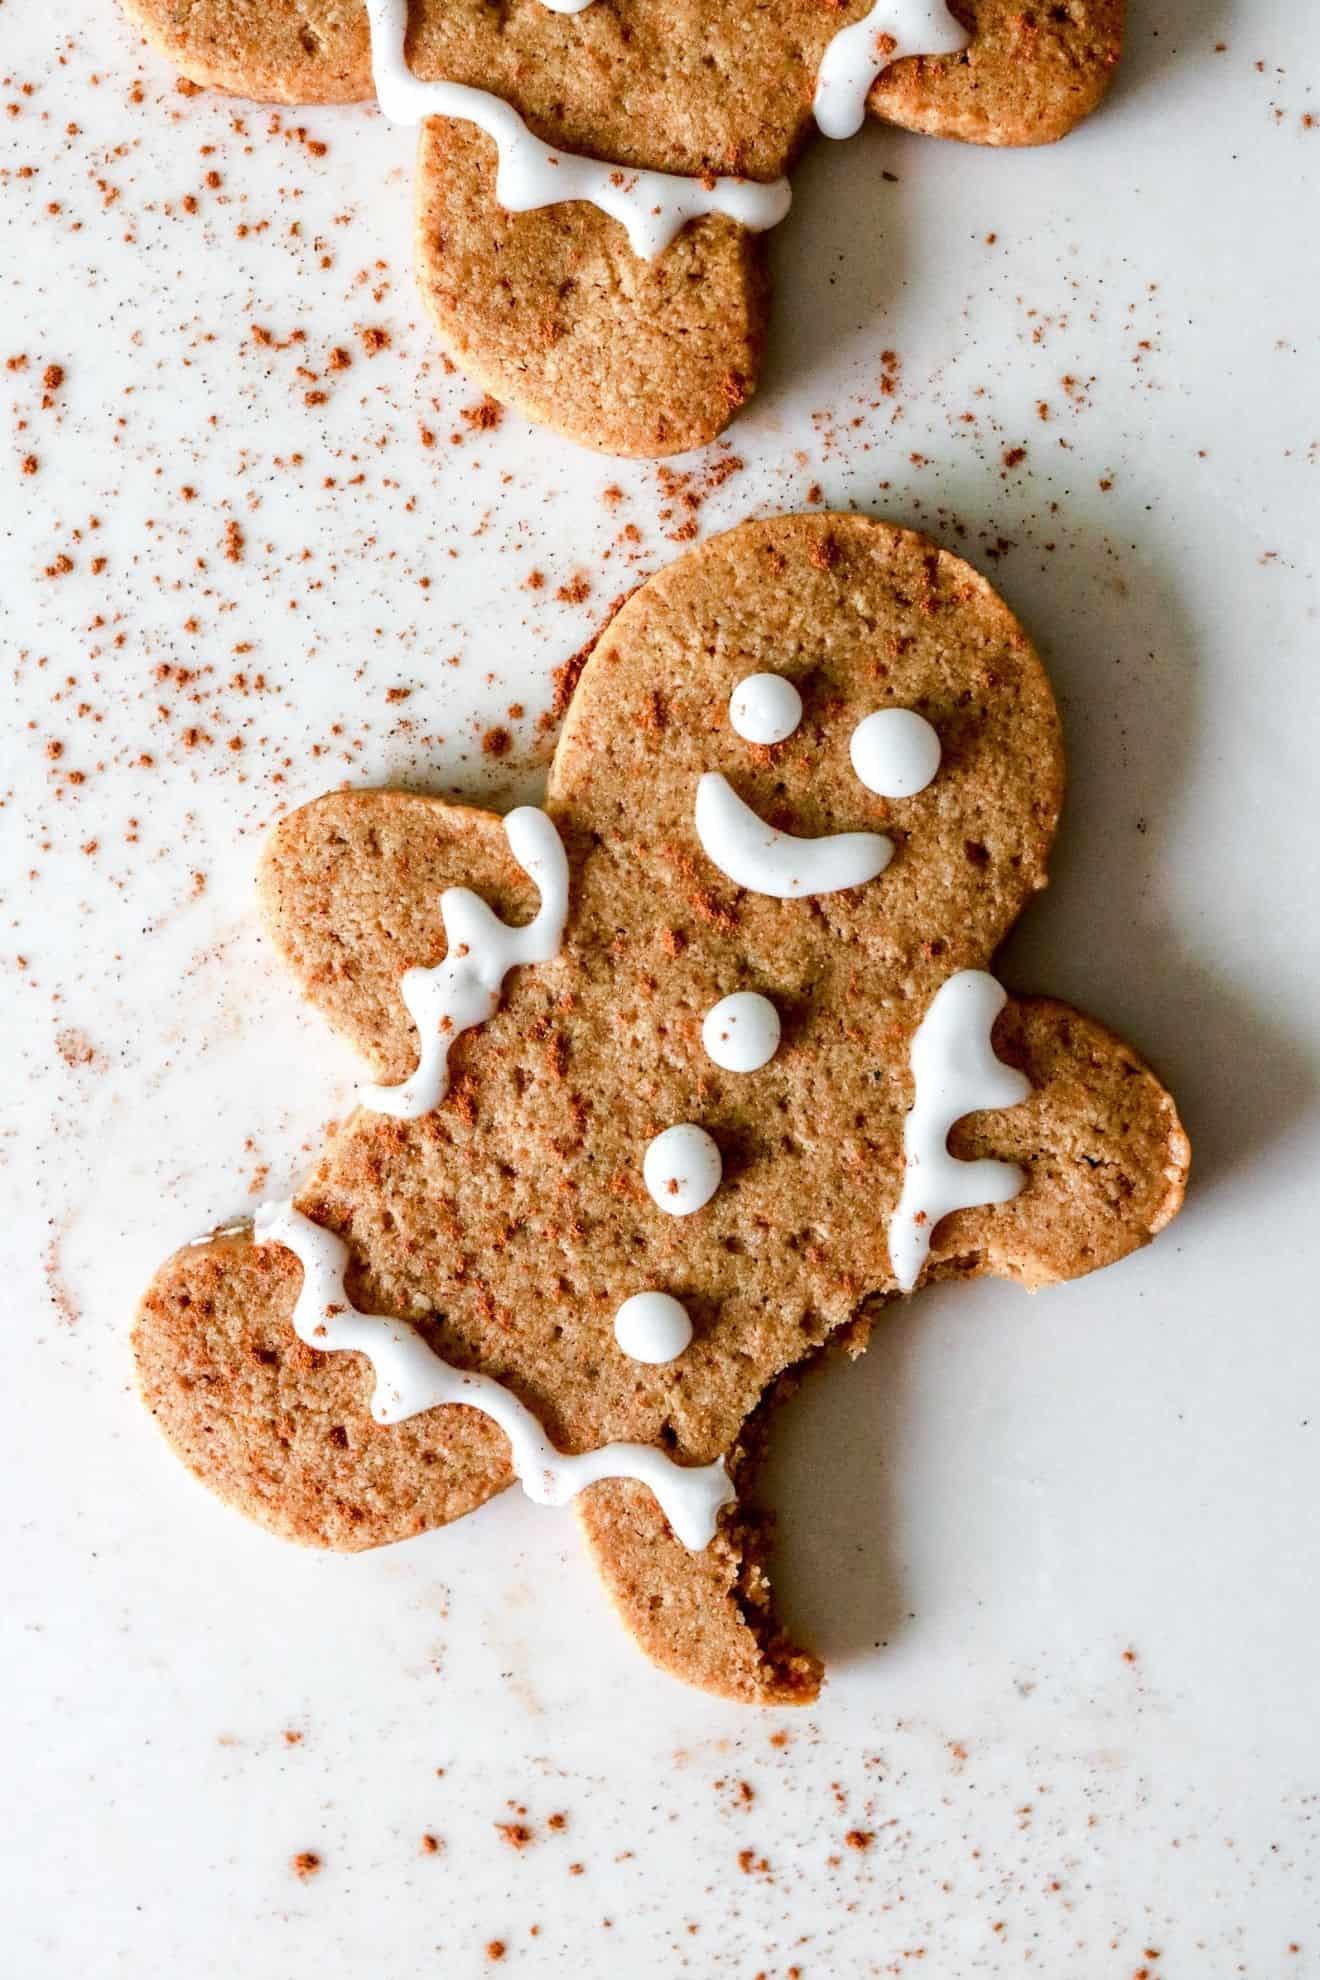 https://thetoastedpinenut.com/wp-content/uploads/2020/12/gingerbread-men-cookies-3.jpg